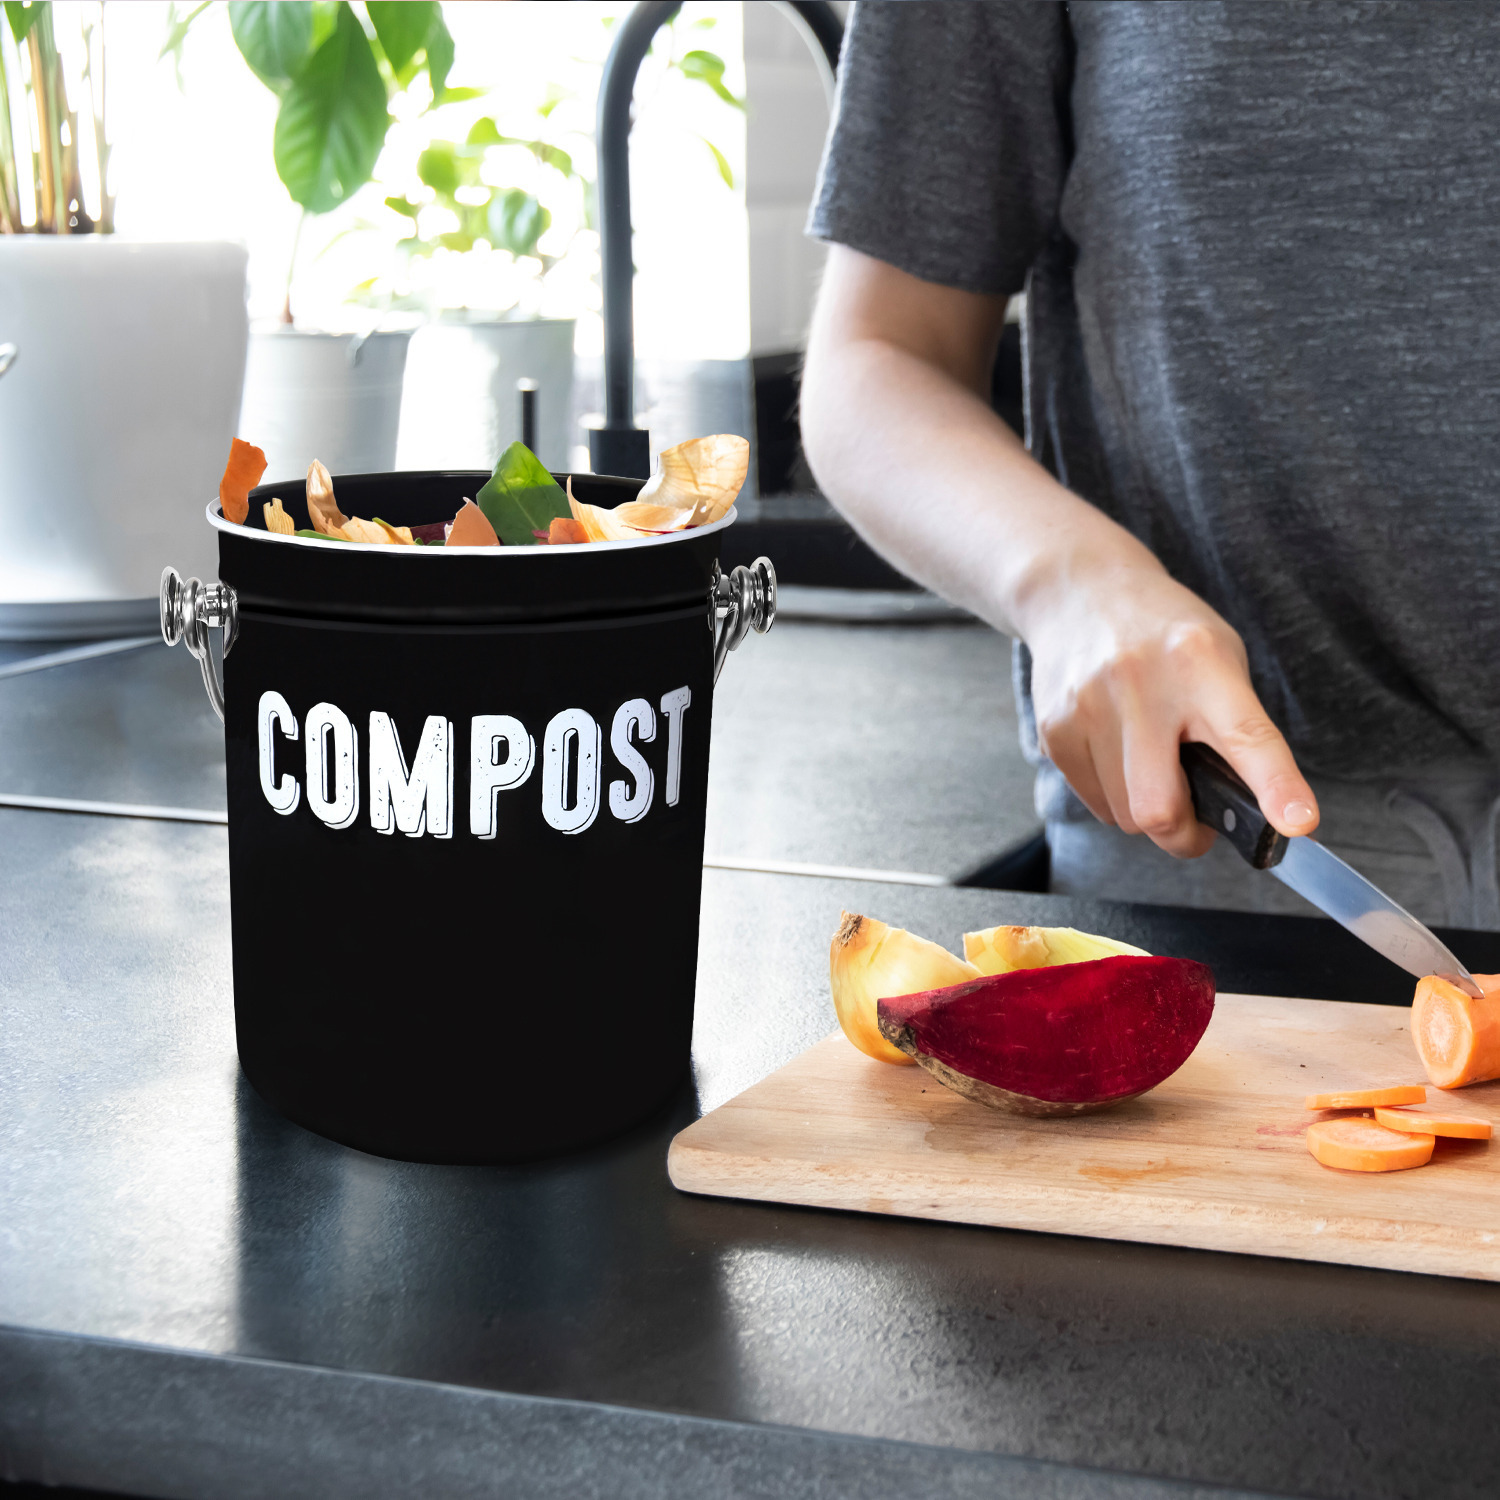 Farm House design  Compost bin  for kitchen scraps - Black